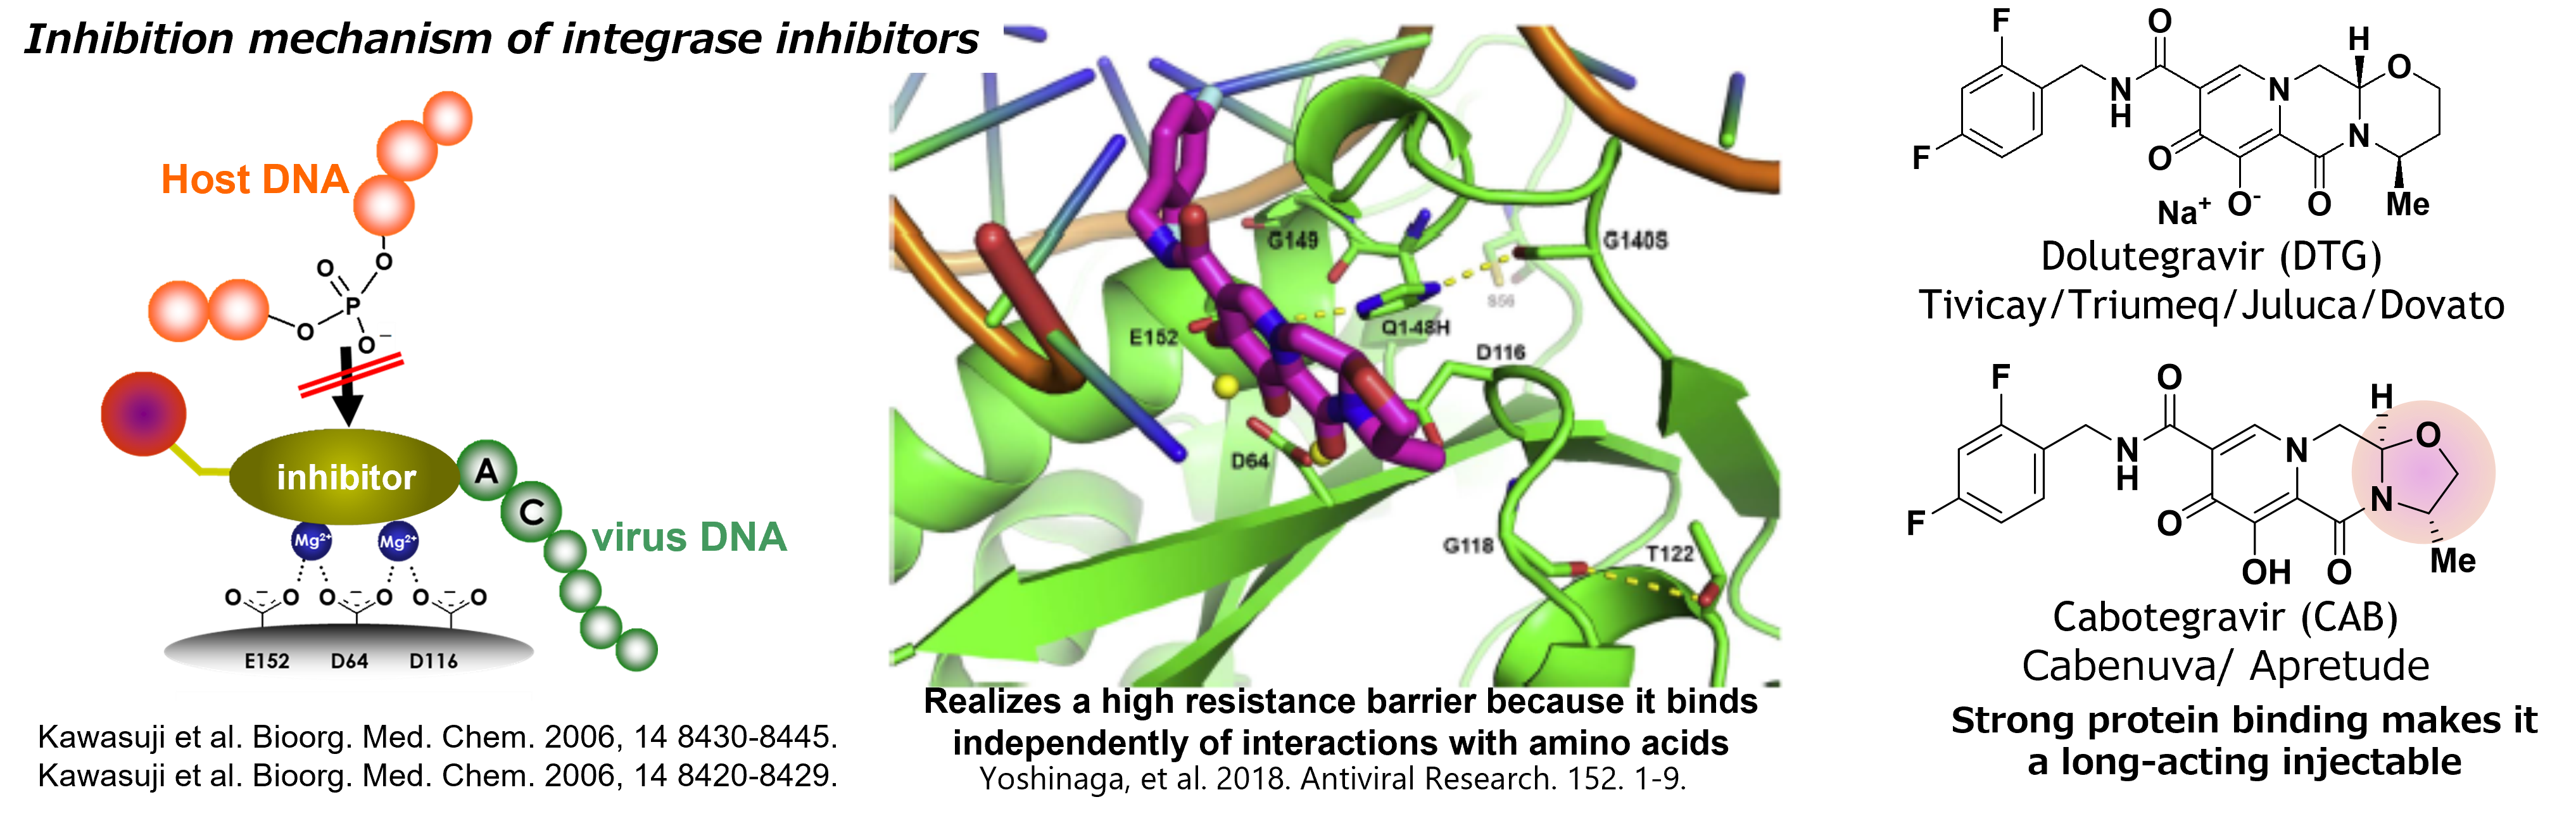 inhibition mechanism of integrase inhibitors